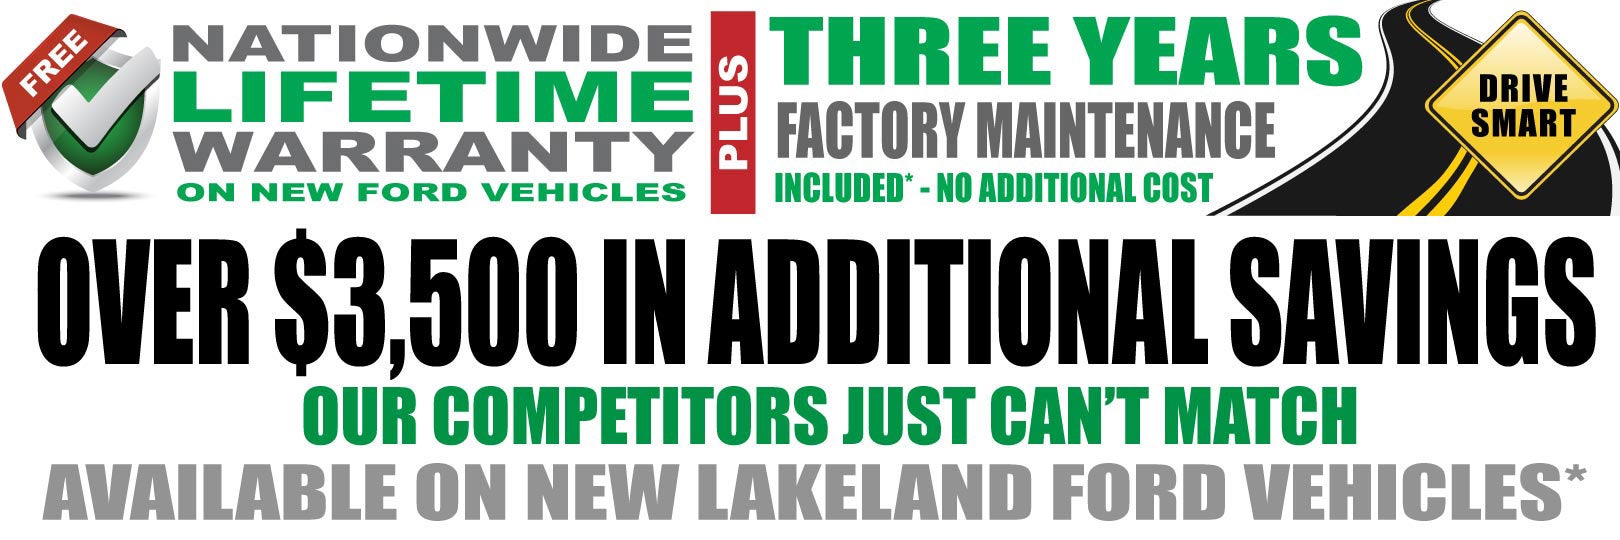 Nationwide Lifetime Warranty | Lakeland Ford in Lakeland FL